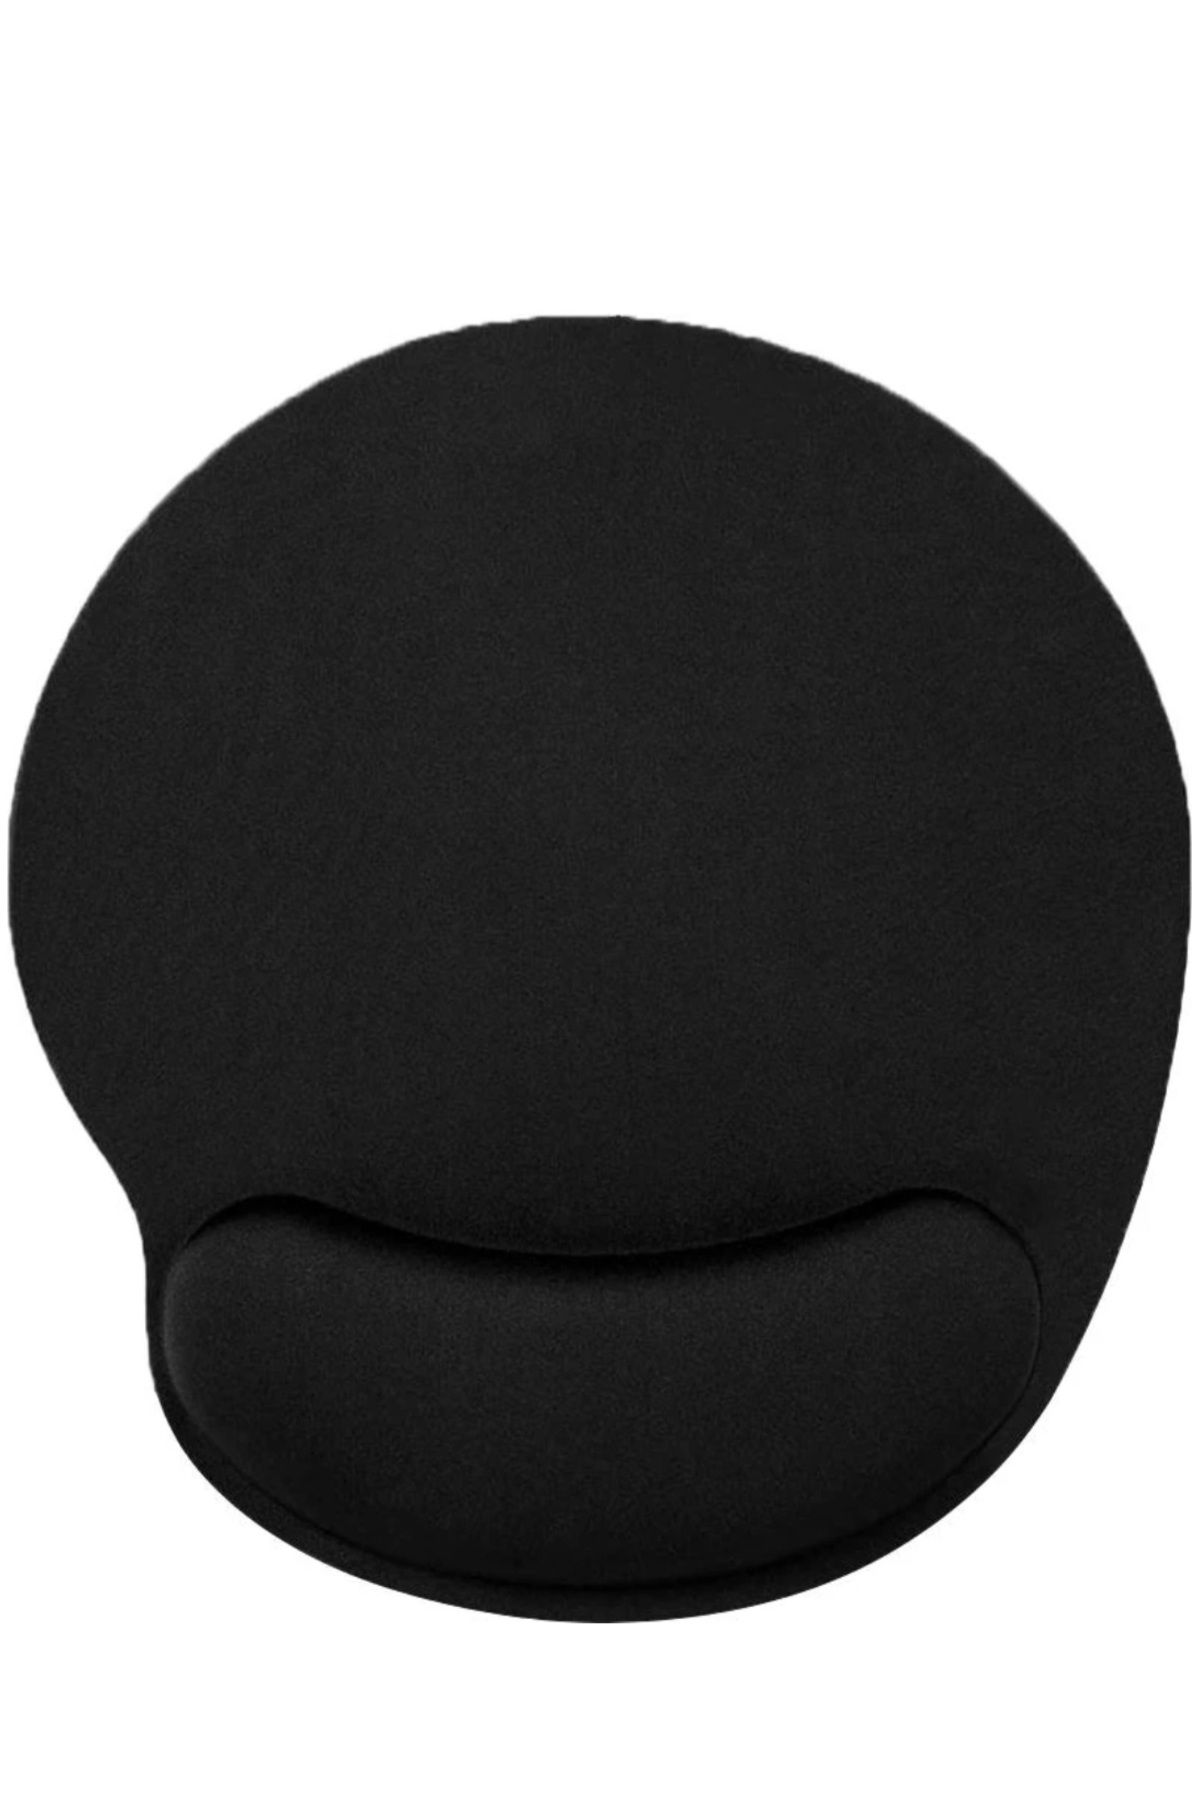 Ankaflex Siyah Renk Bilek Destekli Kaymaz Taban Ergonomik Mouse Pad